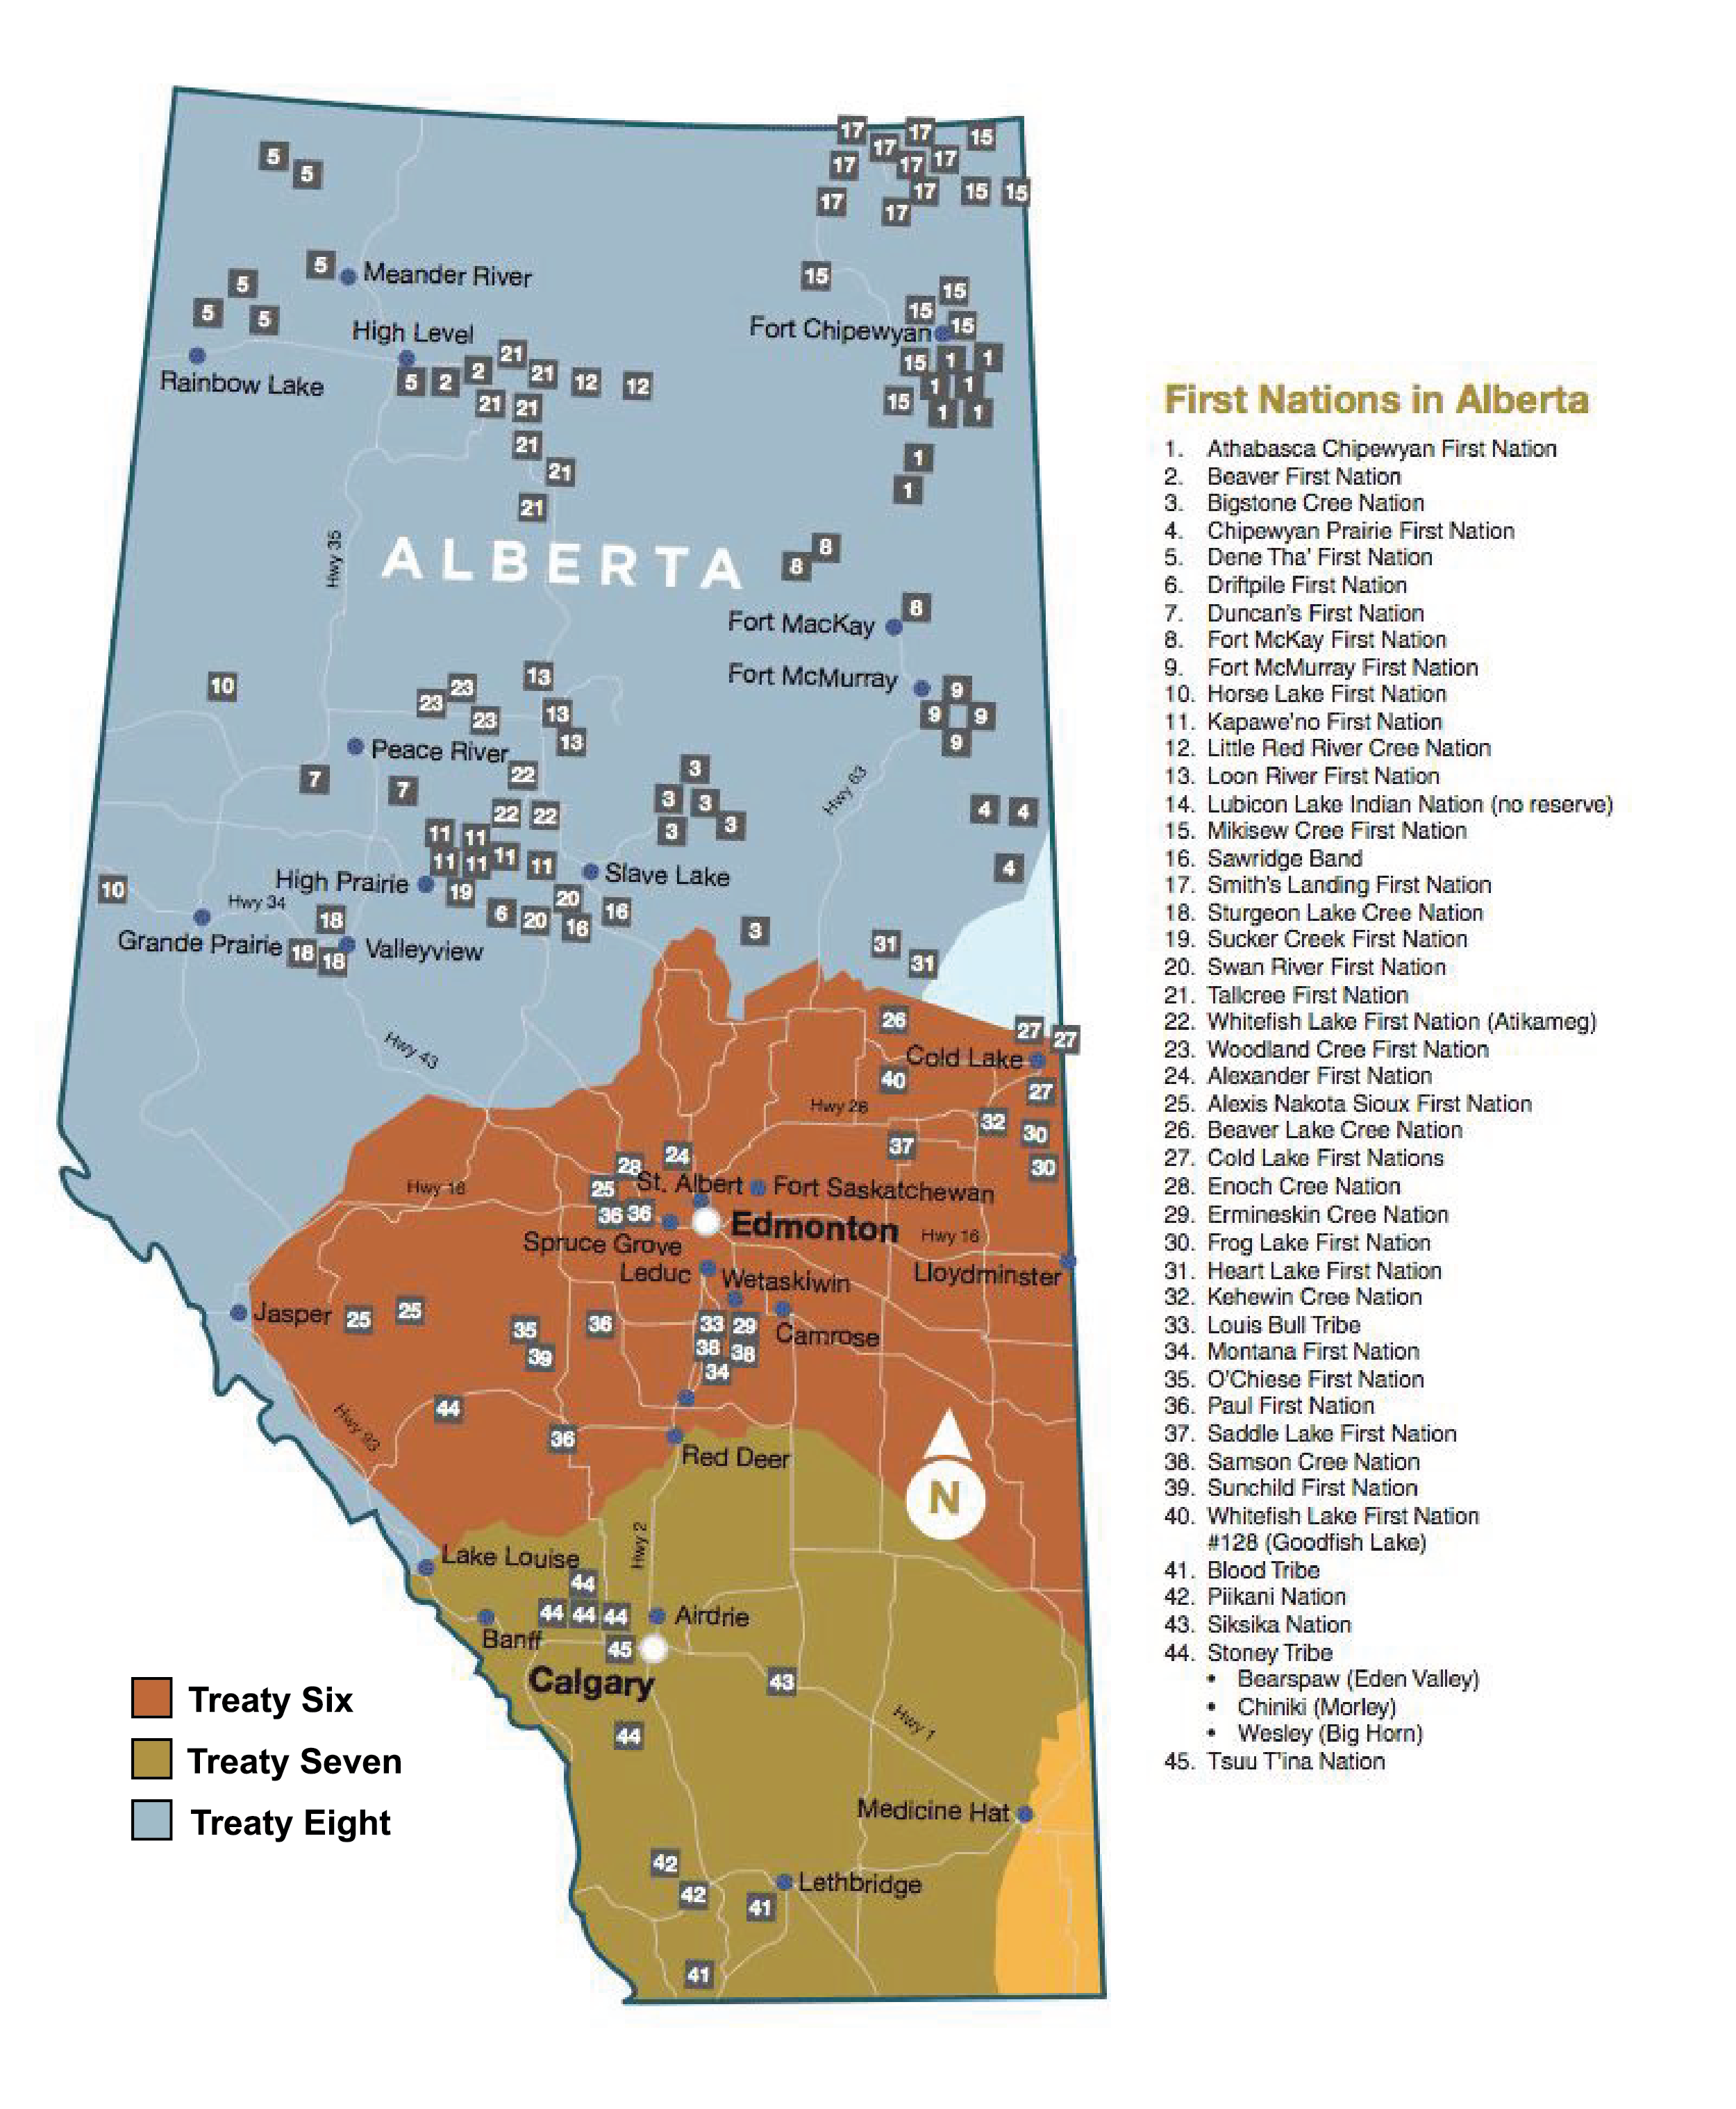 Alberta Treaty Map